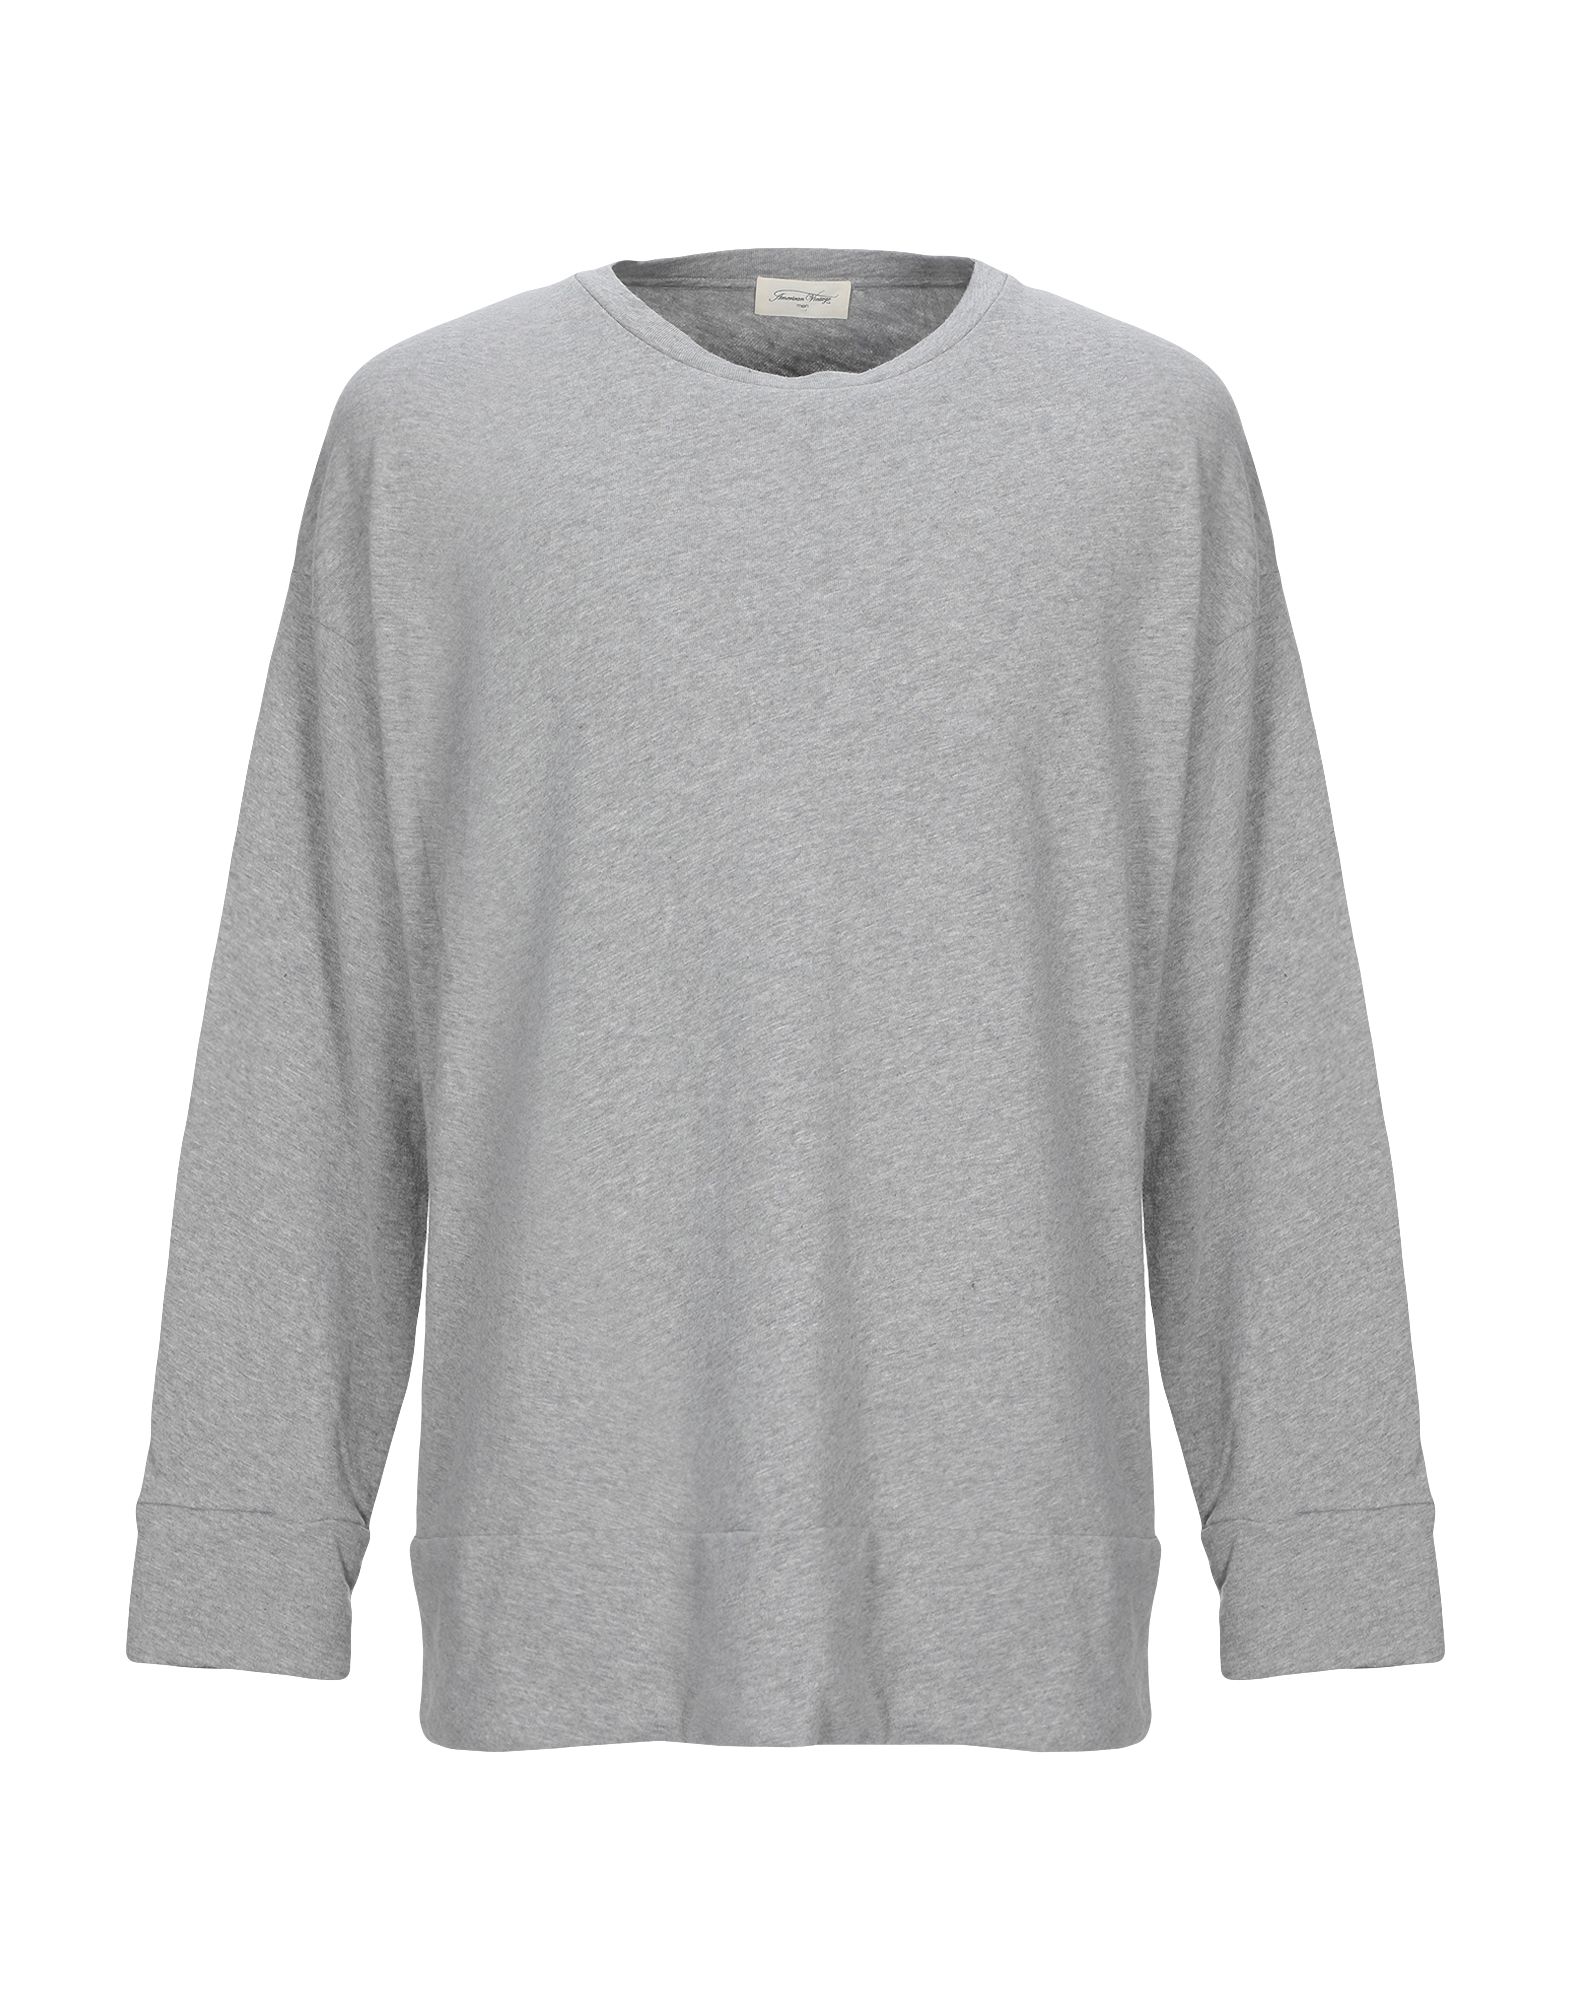 American Vintage Sweatshirt In Light Grey | ModeSens